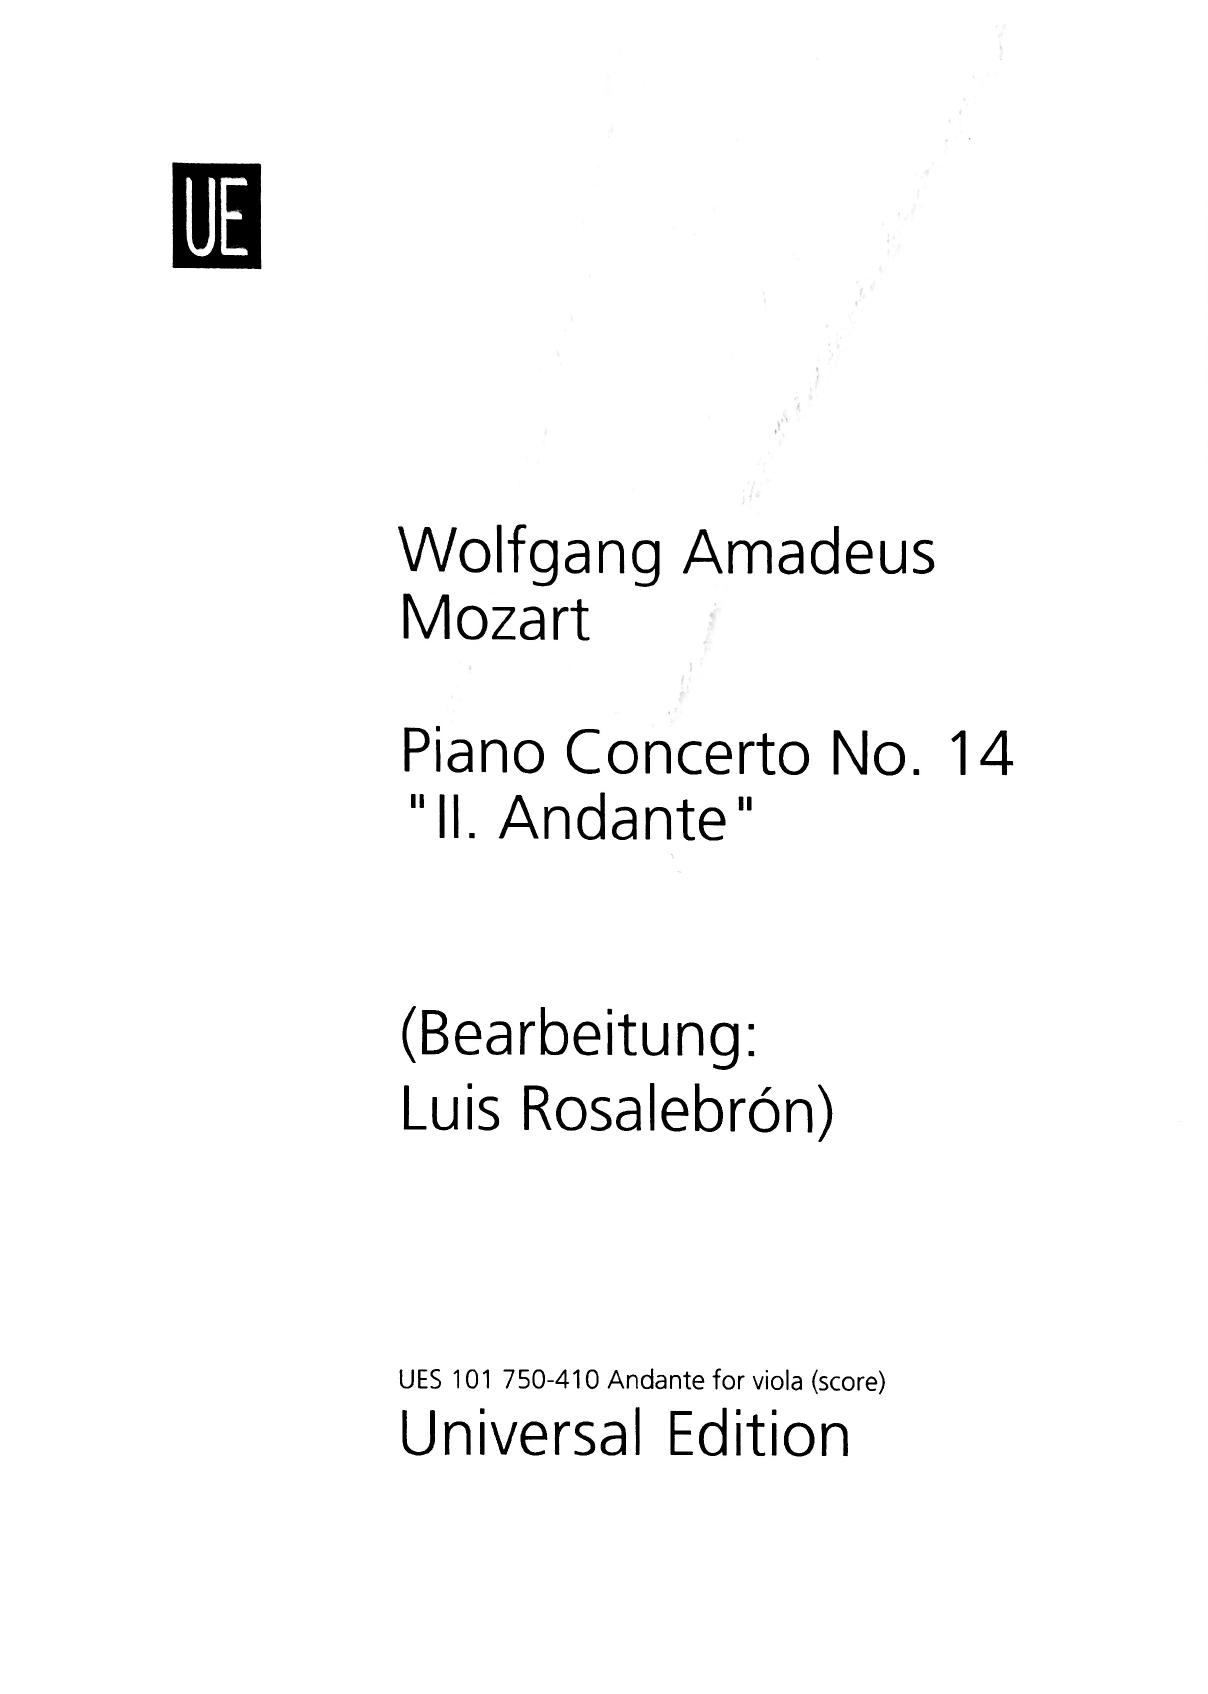 Universal Edition Mozart (Rosalebron): Andante for viola from Piano Concerto No. 14 (viola) UNIVERSAL